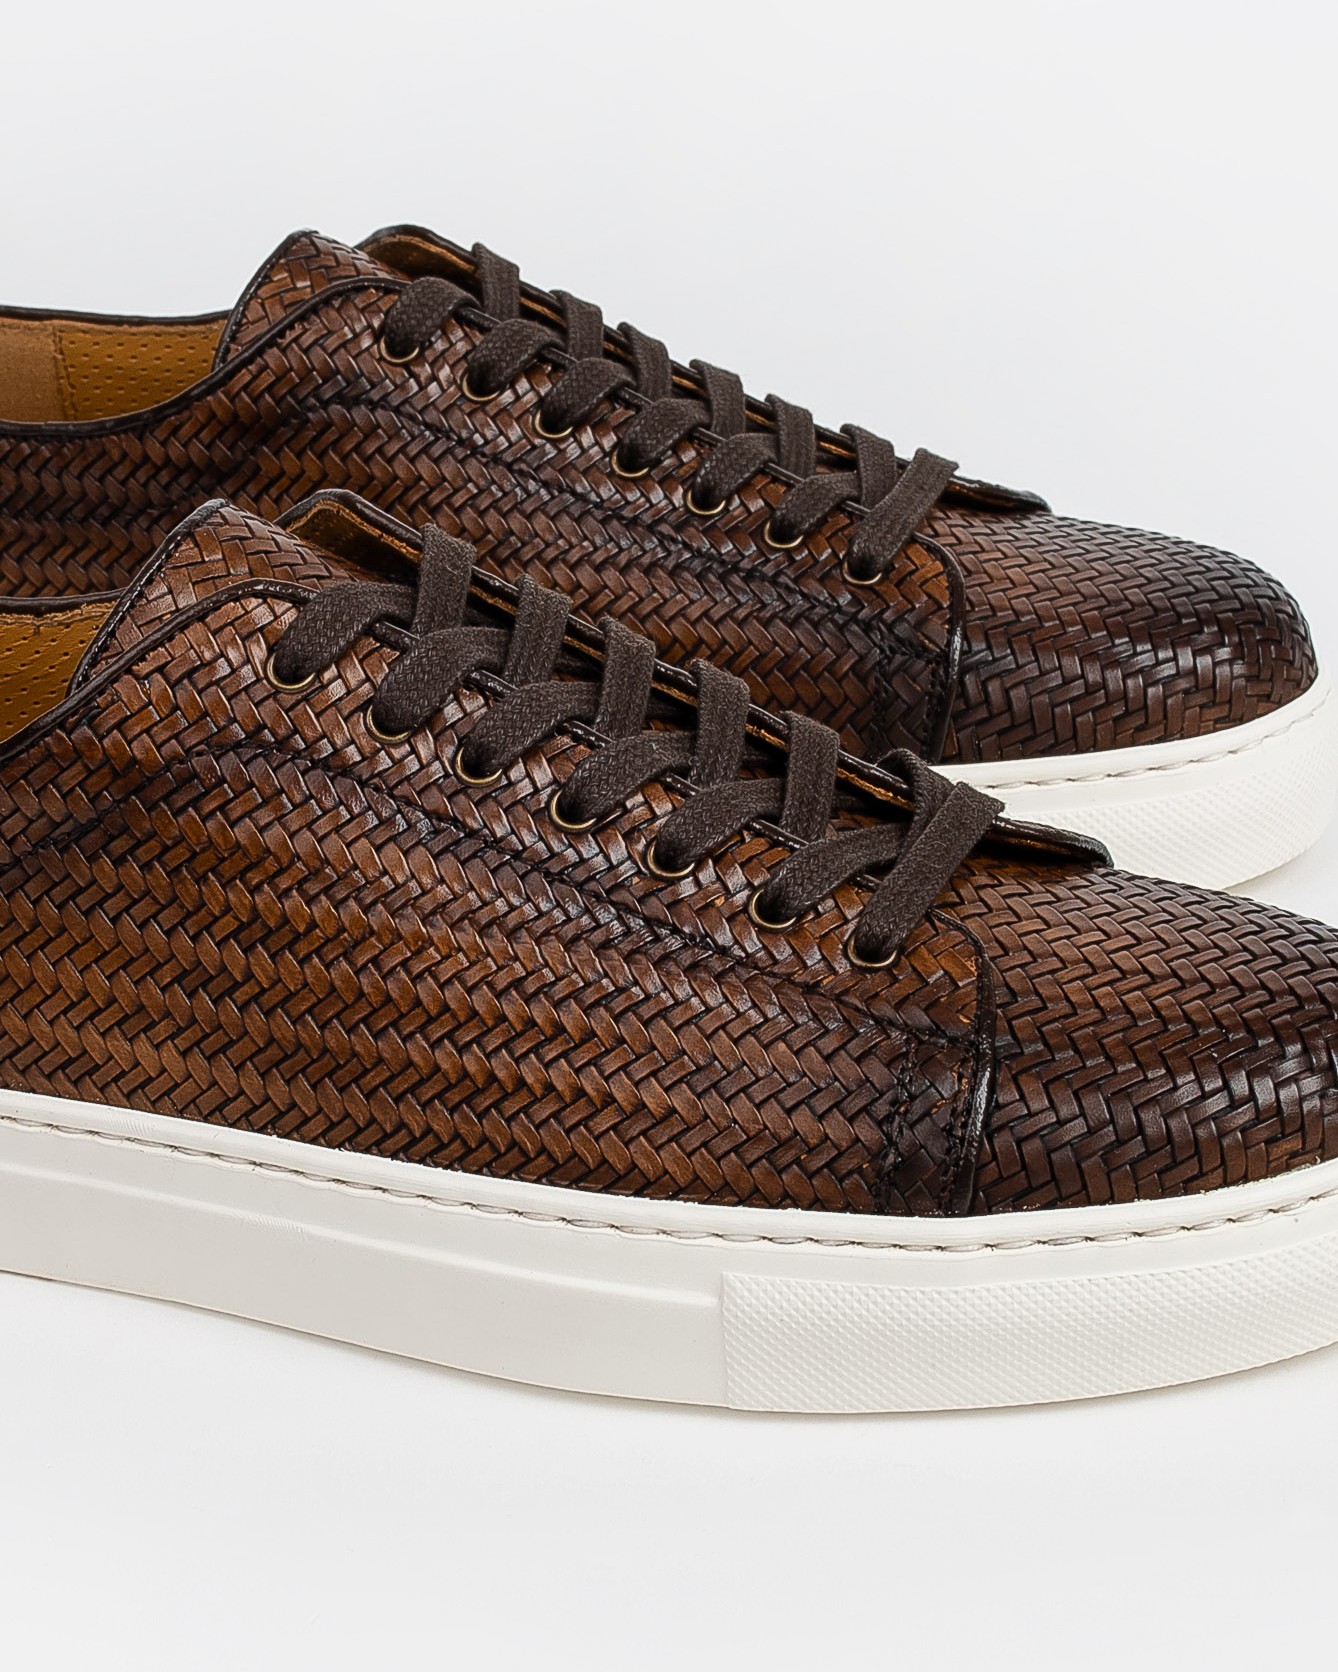 calce-zapatillas-magnum-gold-sneakers-brown-marron (7)